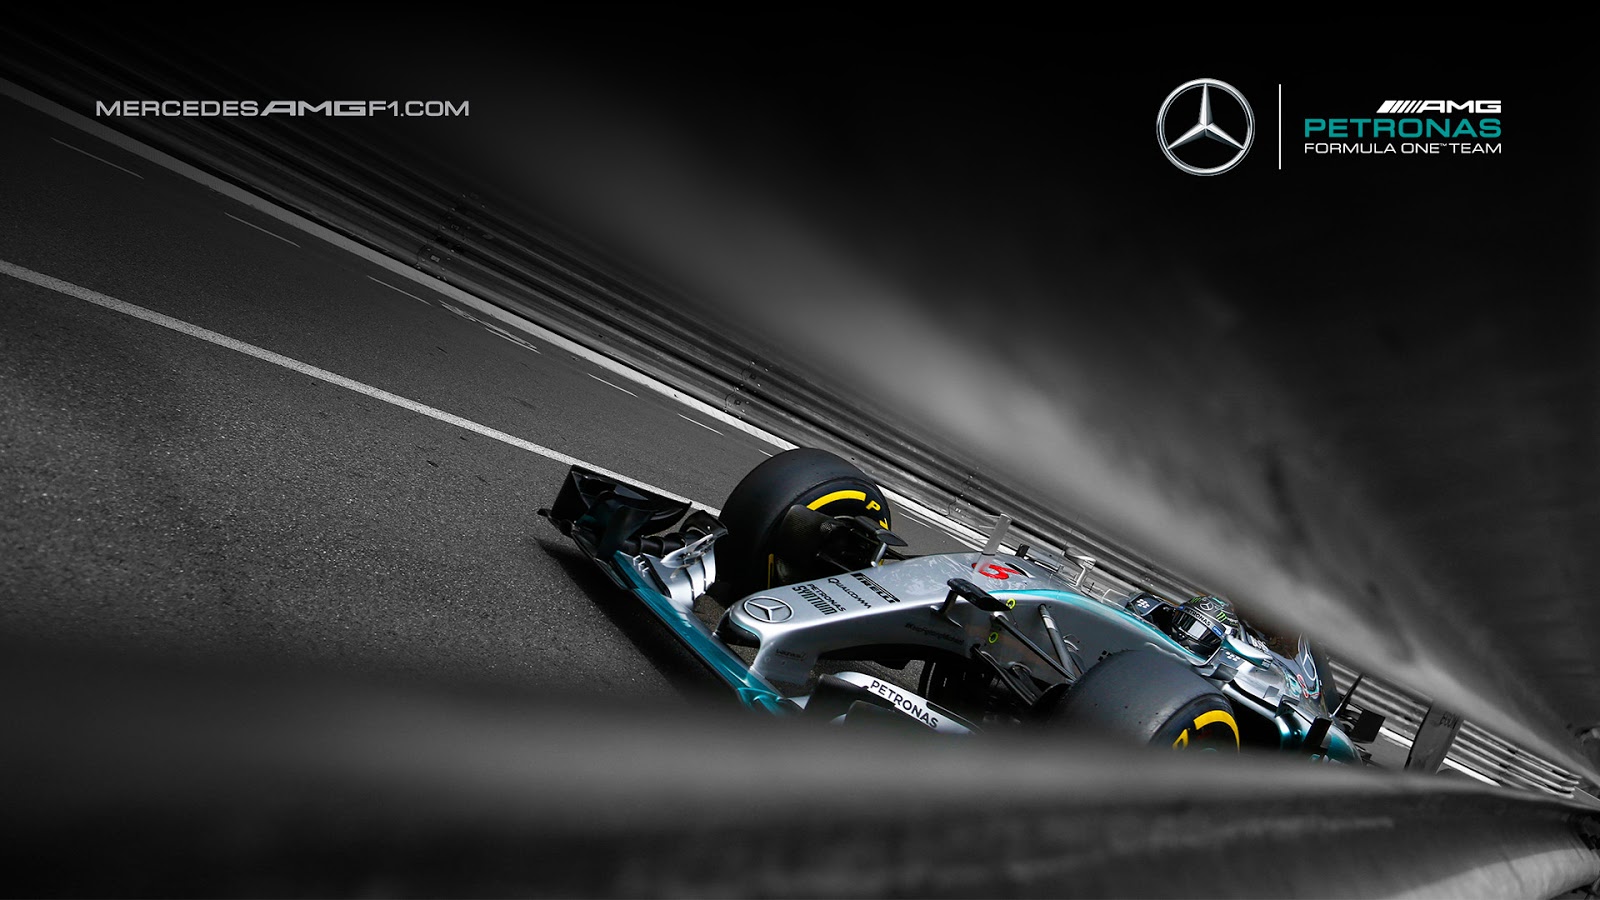 Mercedes AMG Petronas Wallpaper monaco 2015 v4jpg